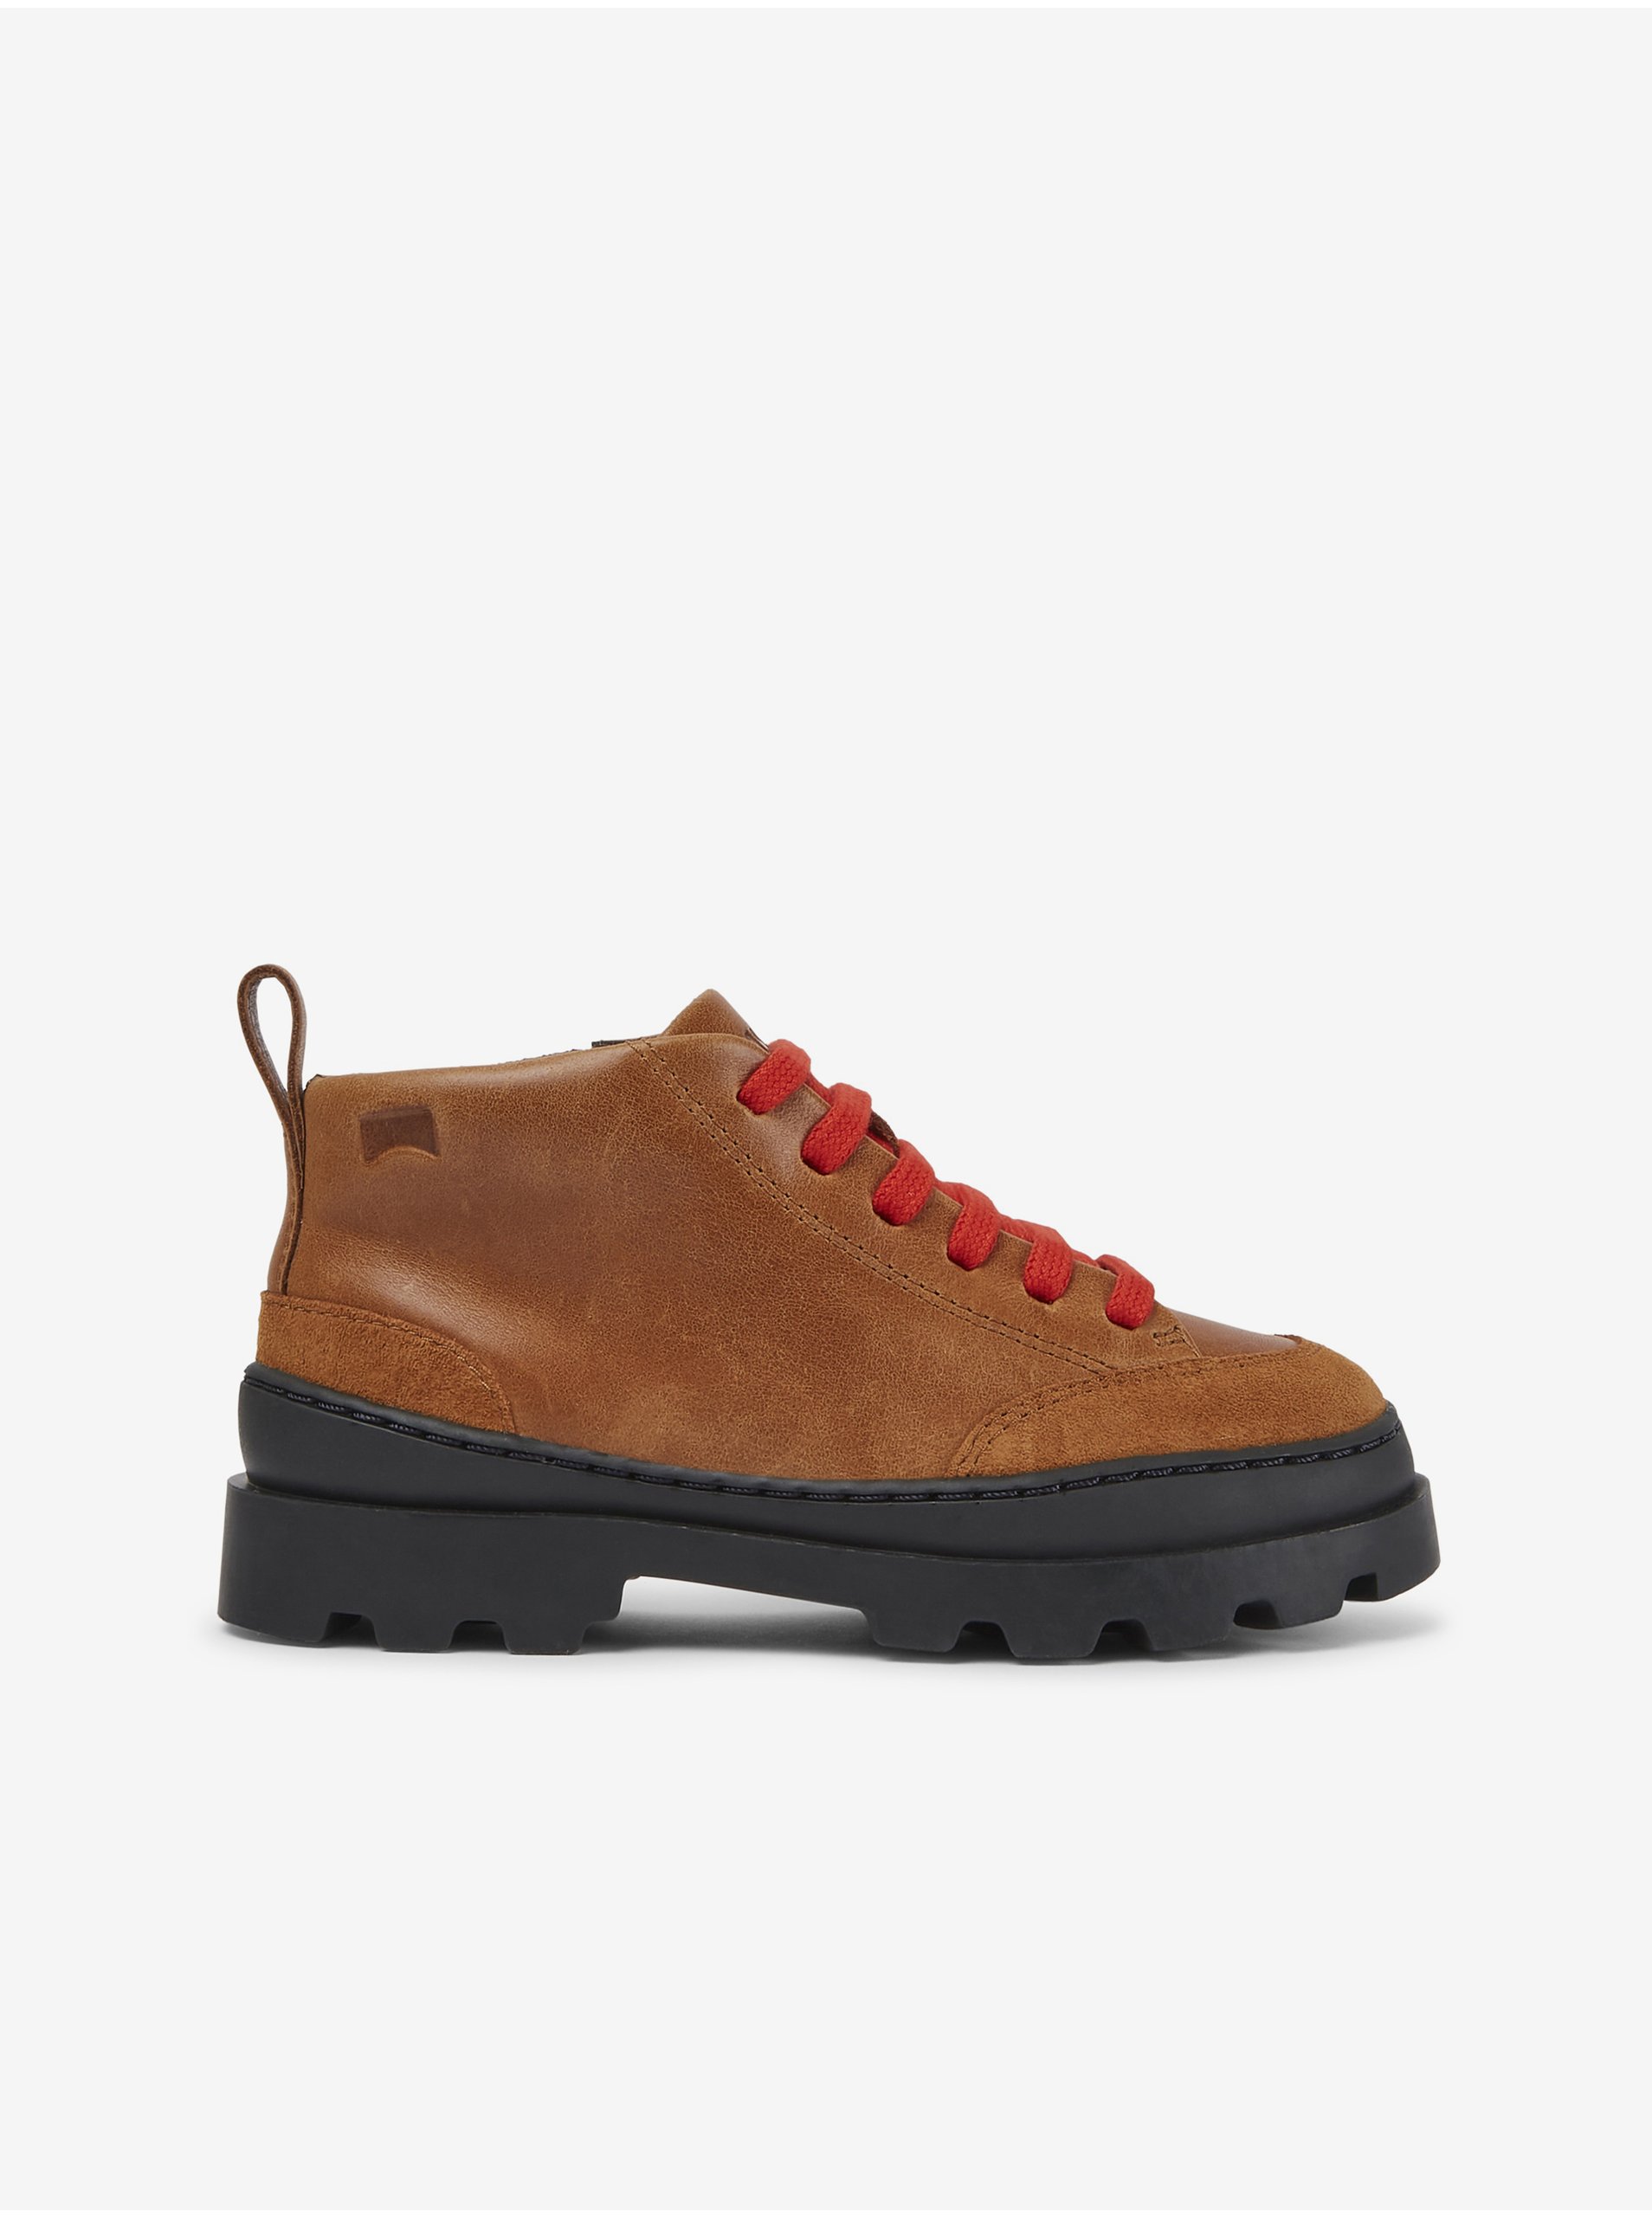 E-shop Hnedé dievčenské kožené topánky Camper Brutus